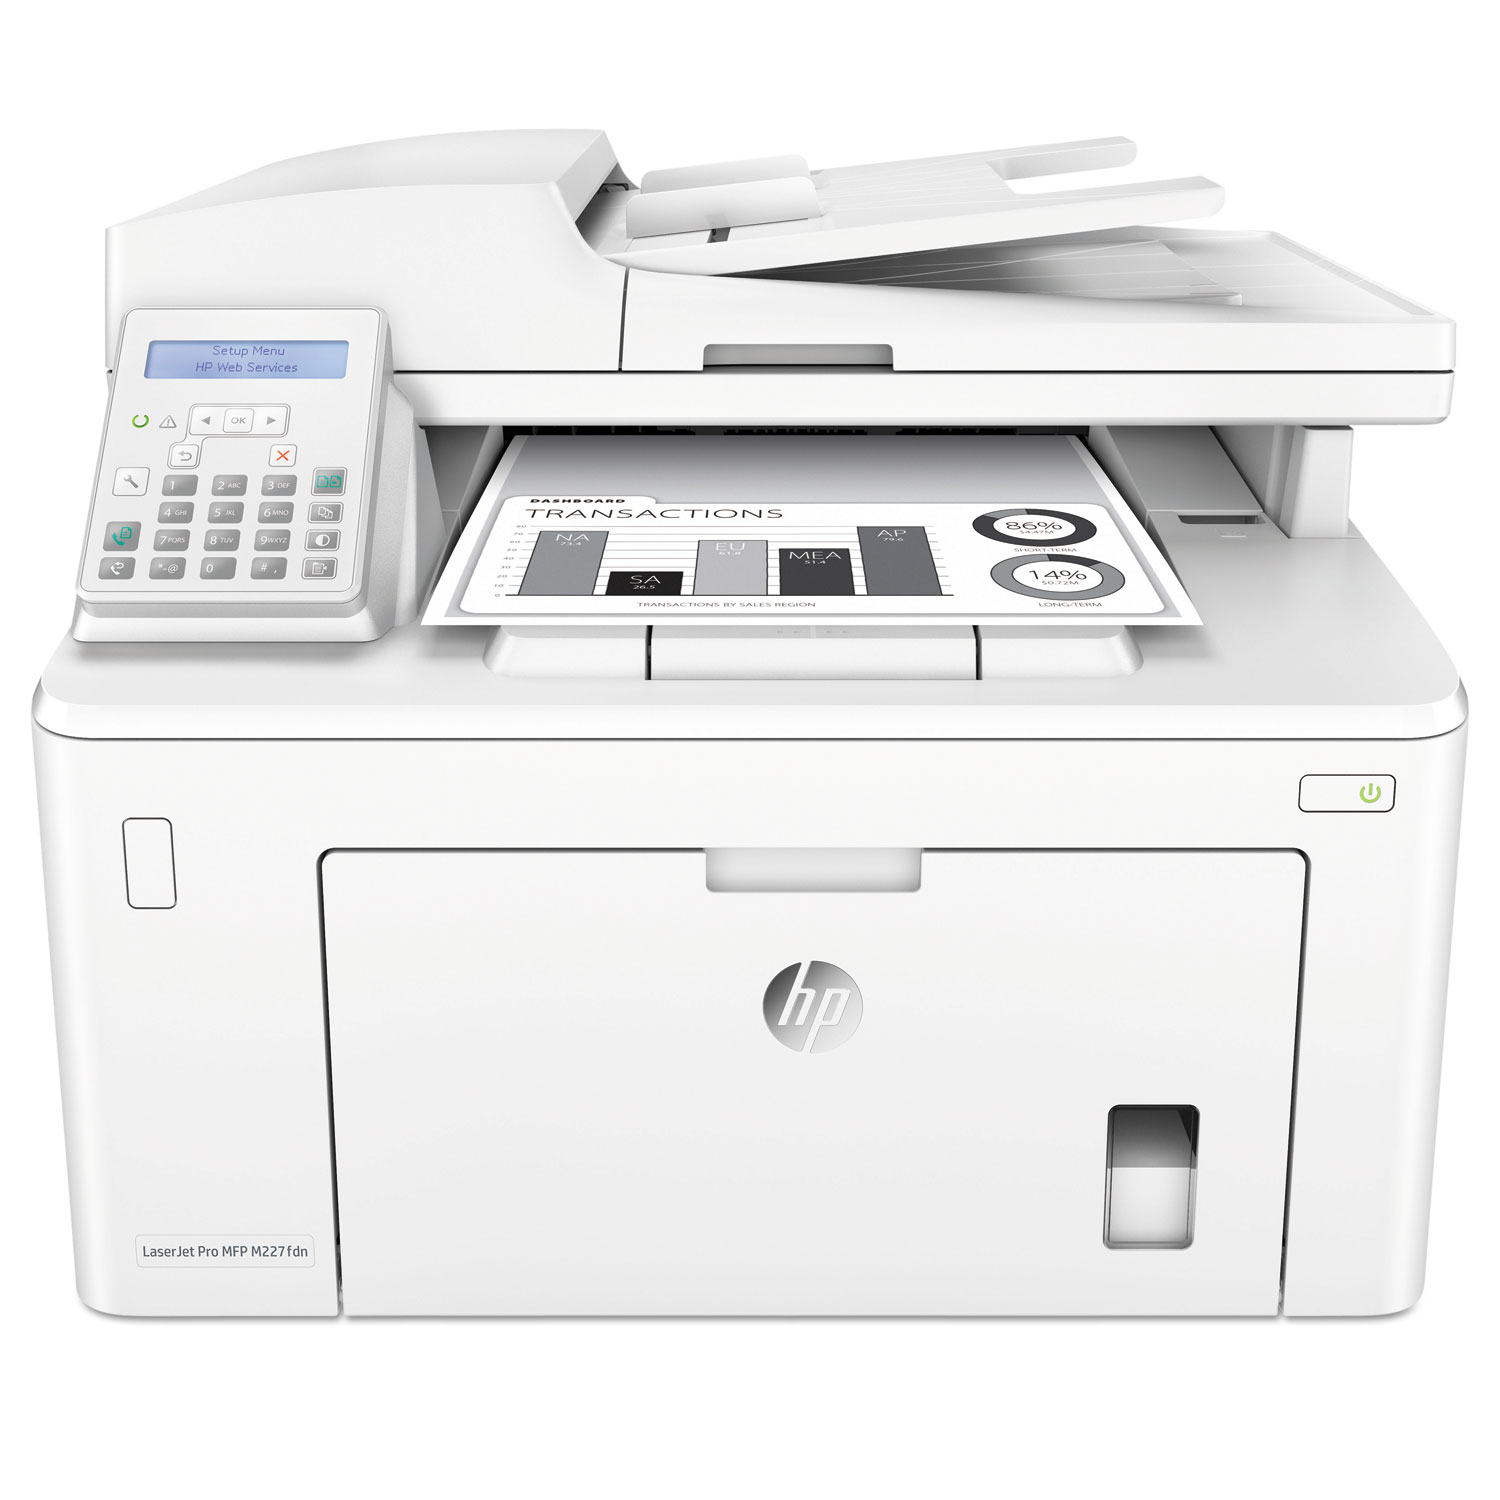  HP G3Q79A#BGJ LaserJet Pro MFP M227fdn Multifunction Printer, Copy/Fax/Print/Scan (HEWG3Q79A) 